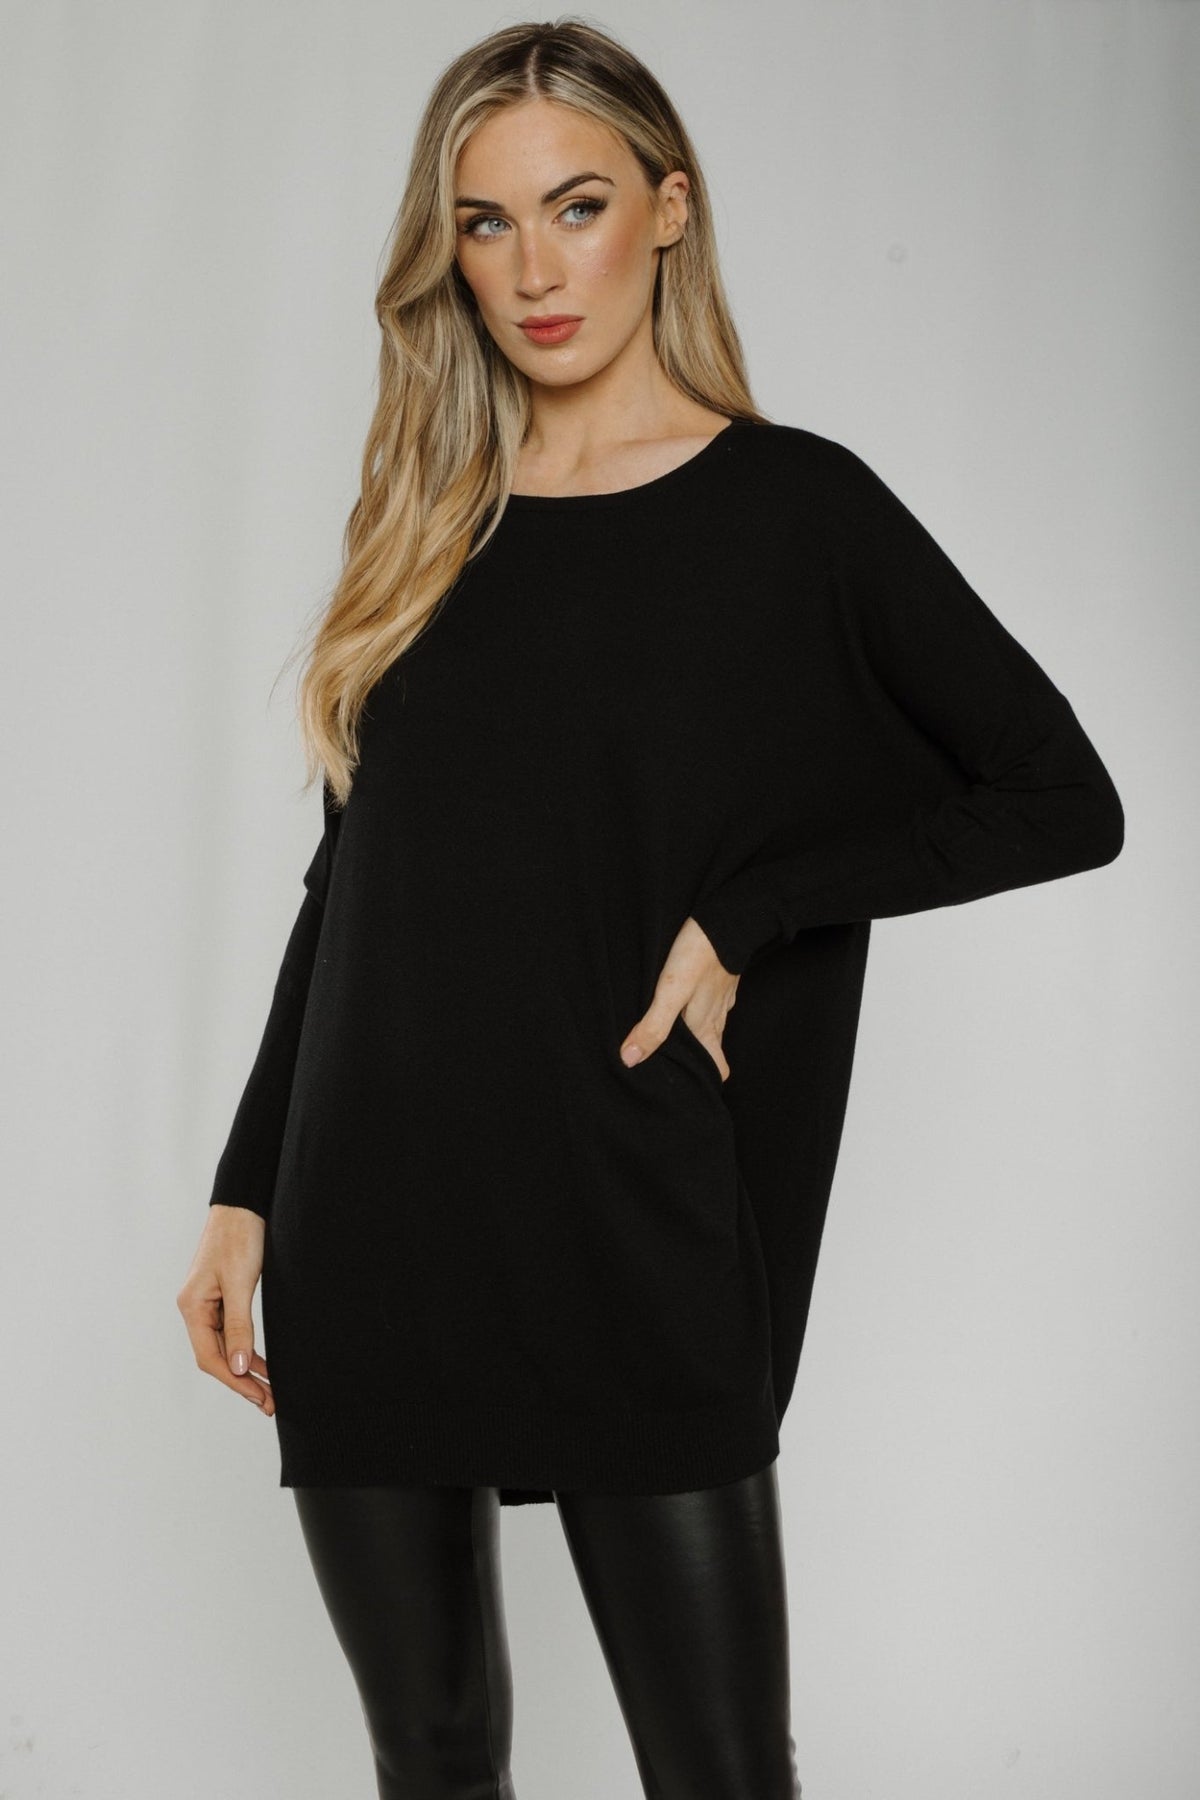 Jane Long Sleeve Top In Black – The Walk in Wardrobe